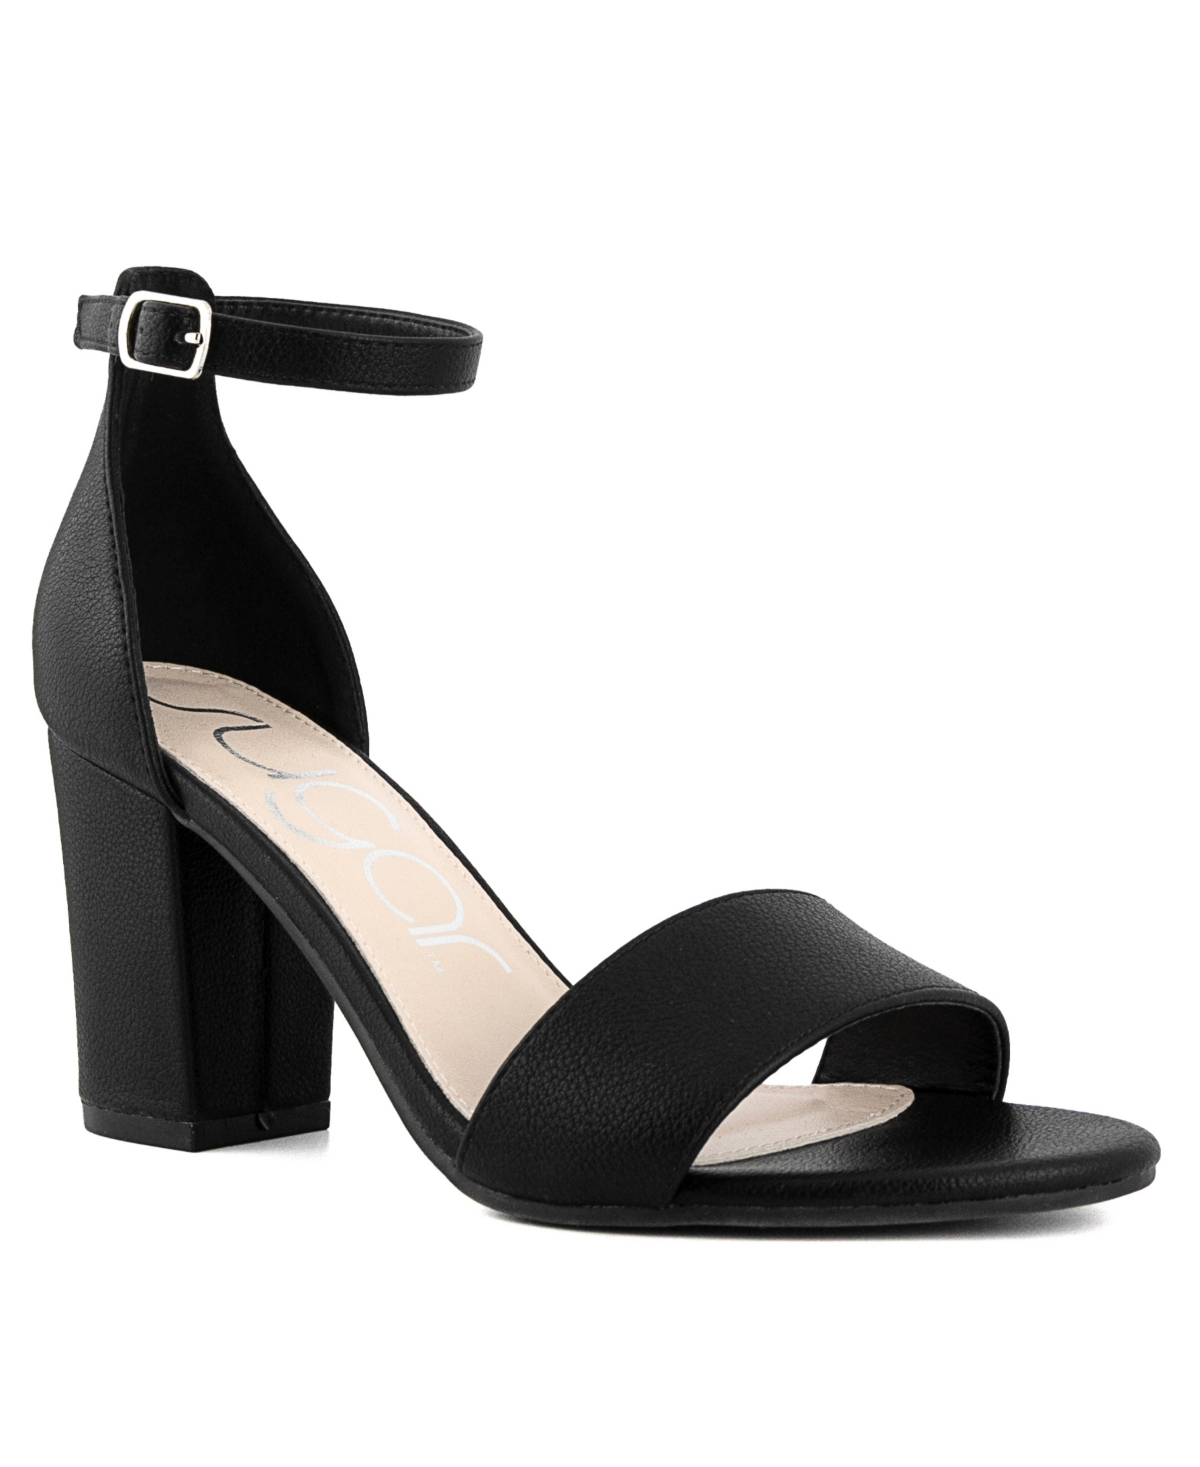  Sugar Women's Slide Sandal Knotted Upper Design Cushioned Open  Toe Slip On Sandals - Olena White 6